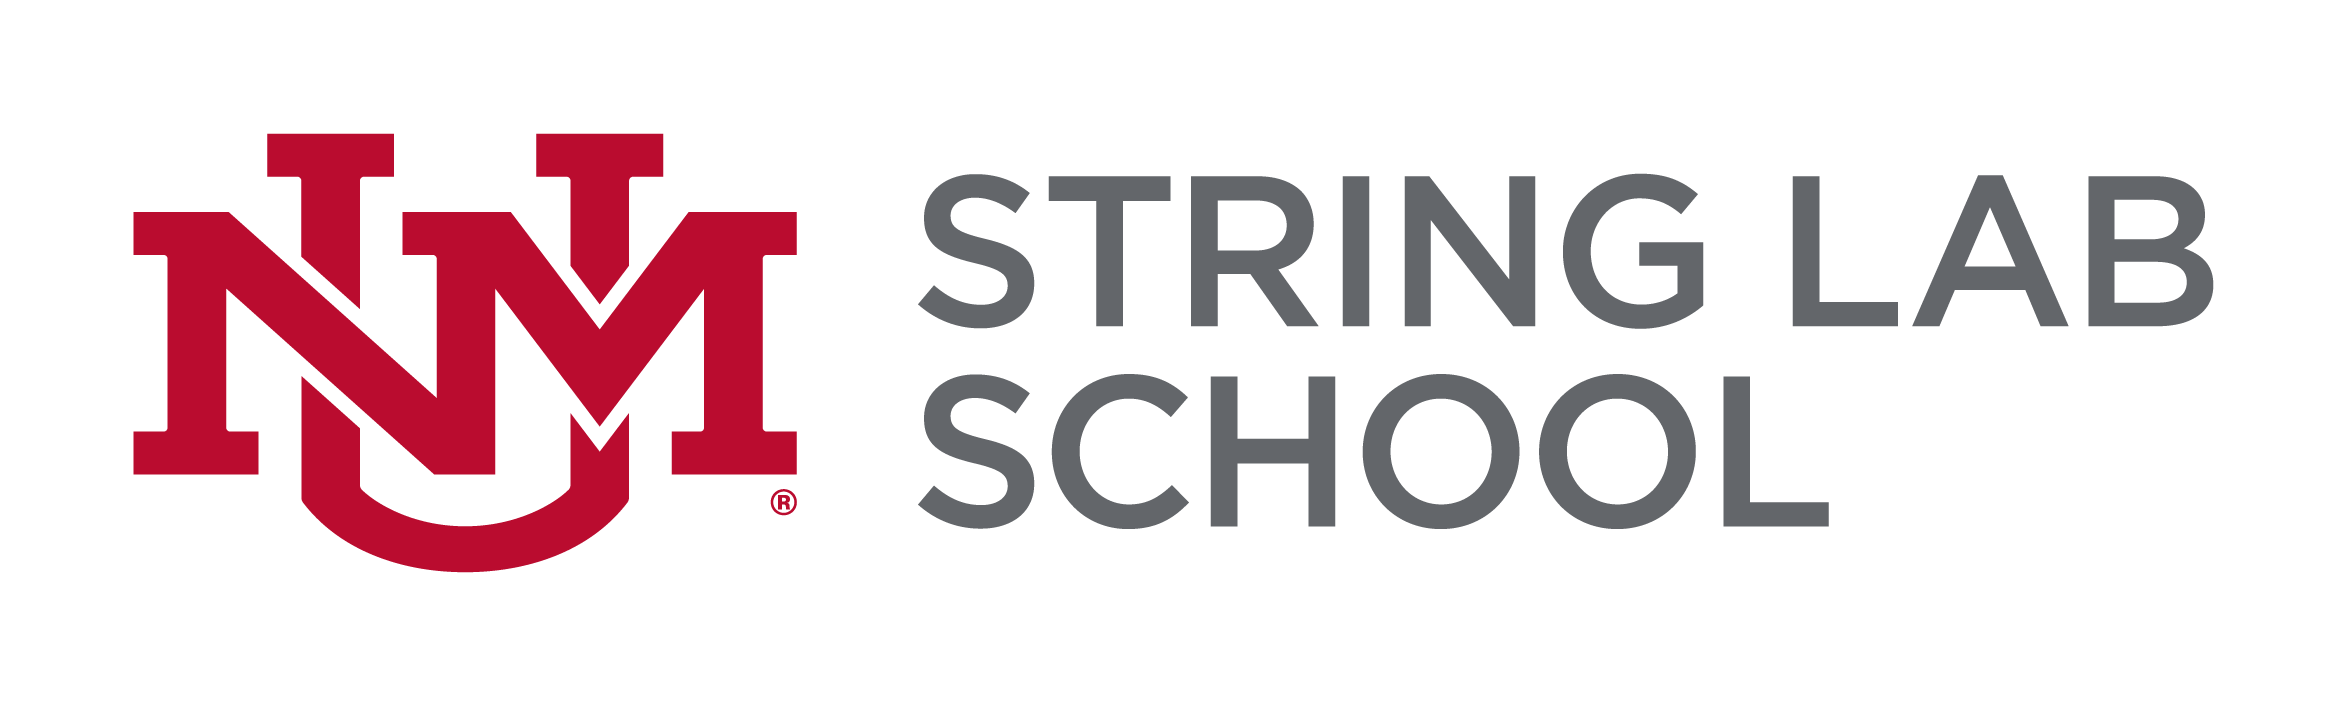 UNM String Lab School Logo